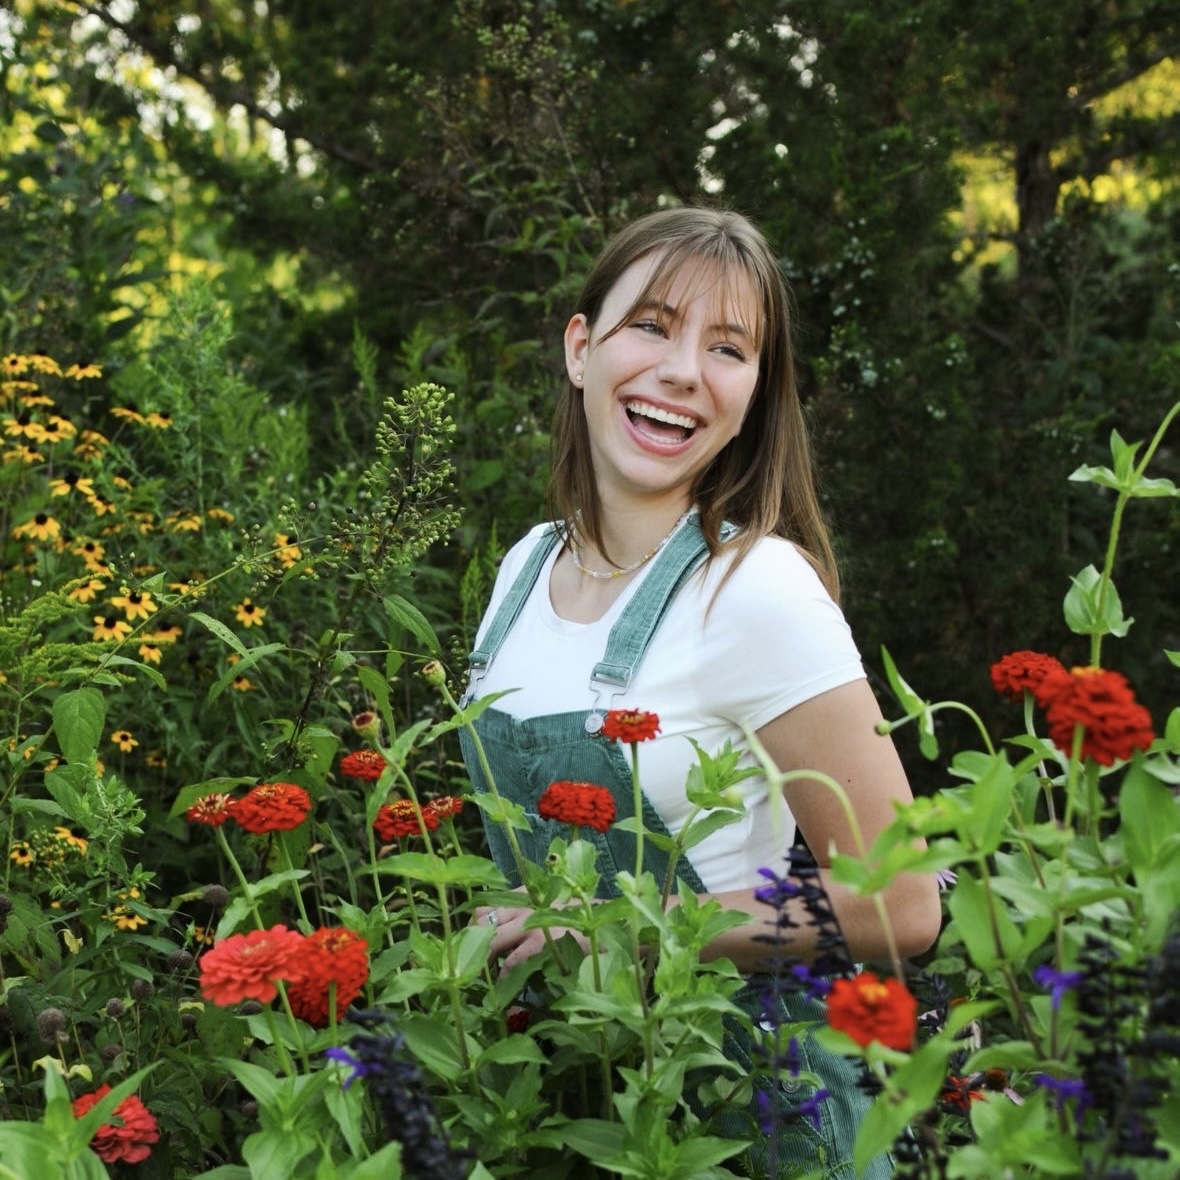 BIG SMILES —Evie Weiszhaar poses in a vibrant flower garden.